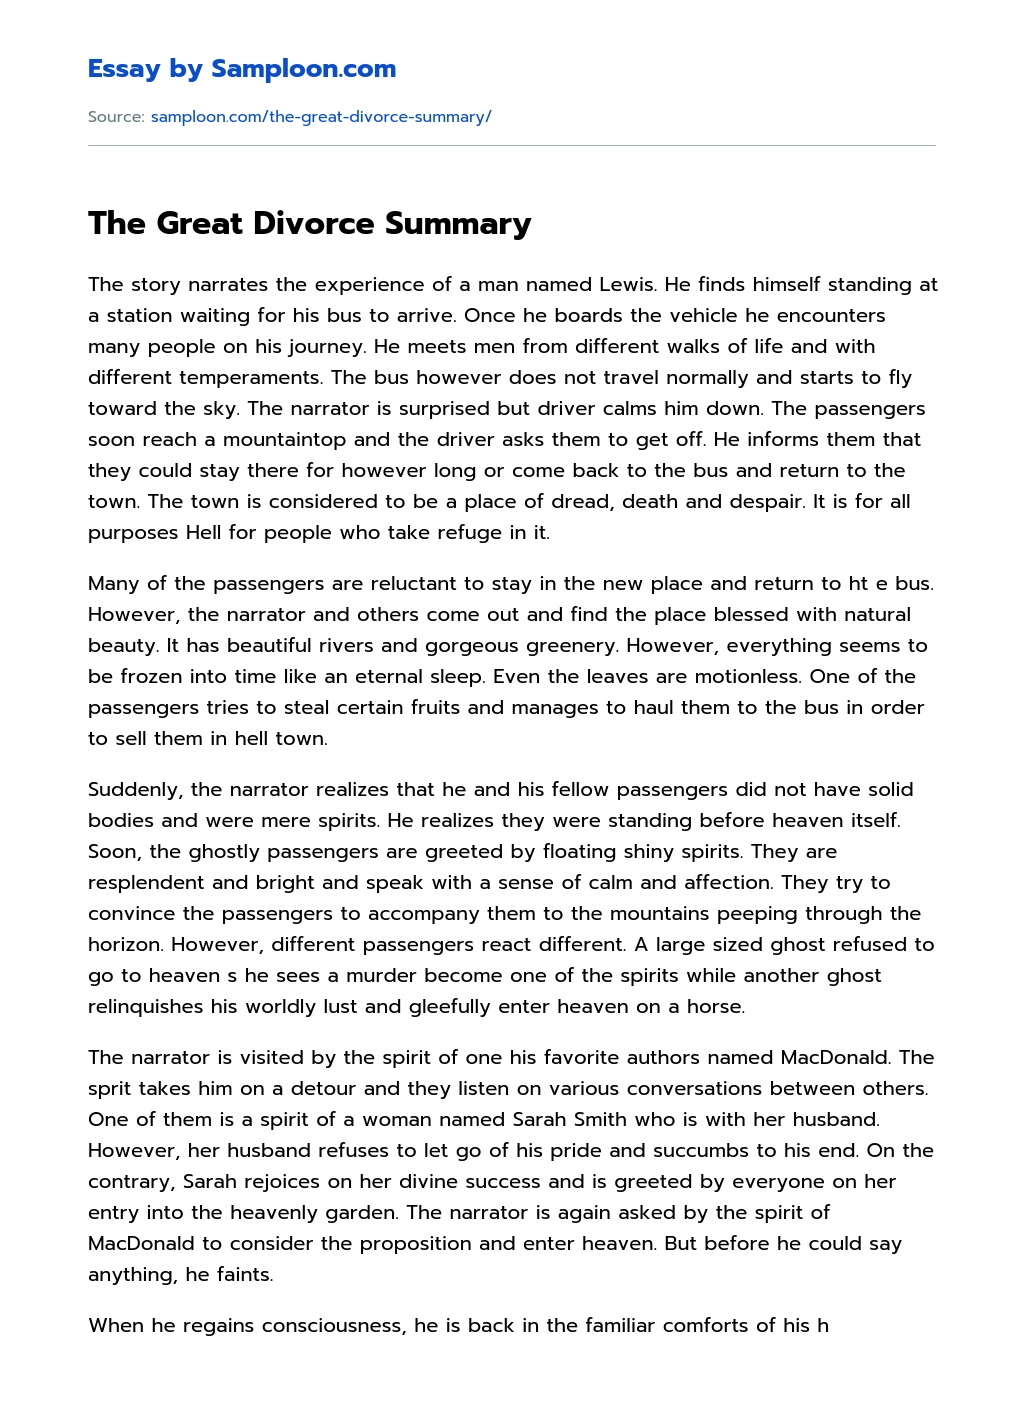 The Great Divorce Summary  essay